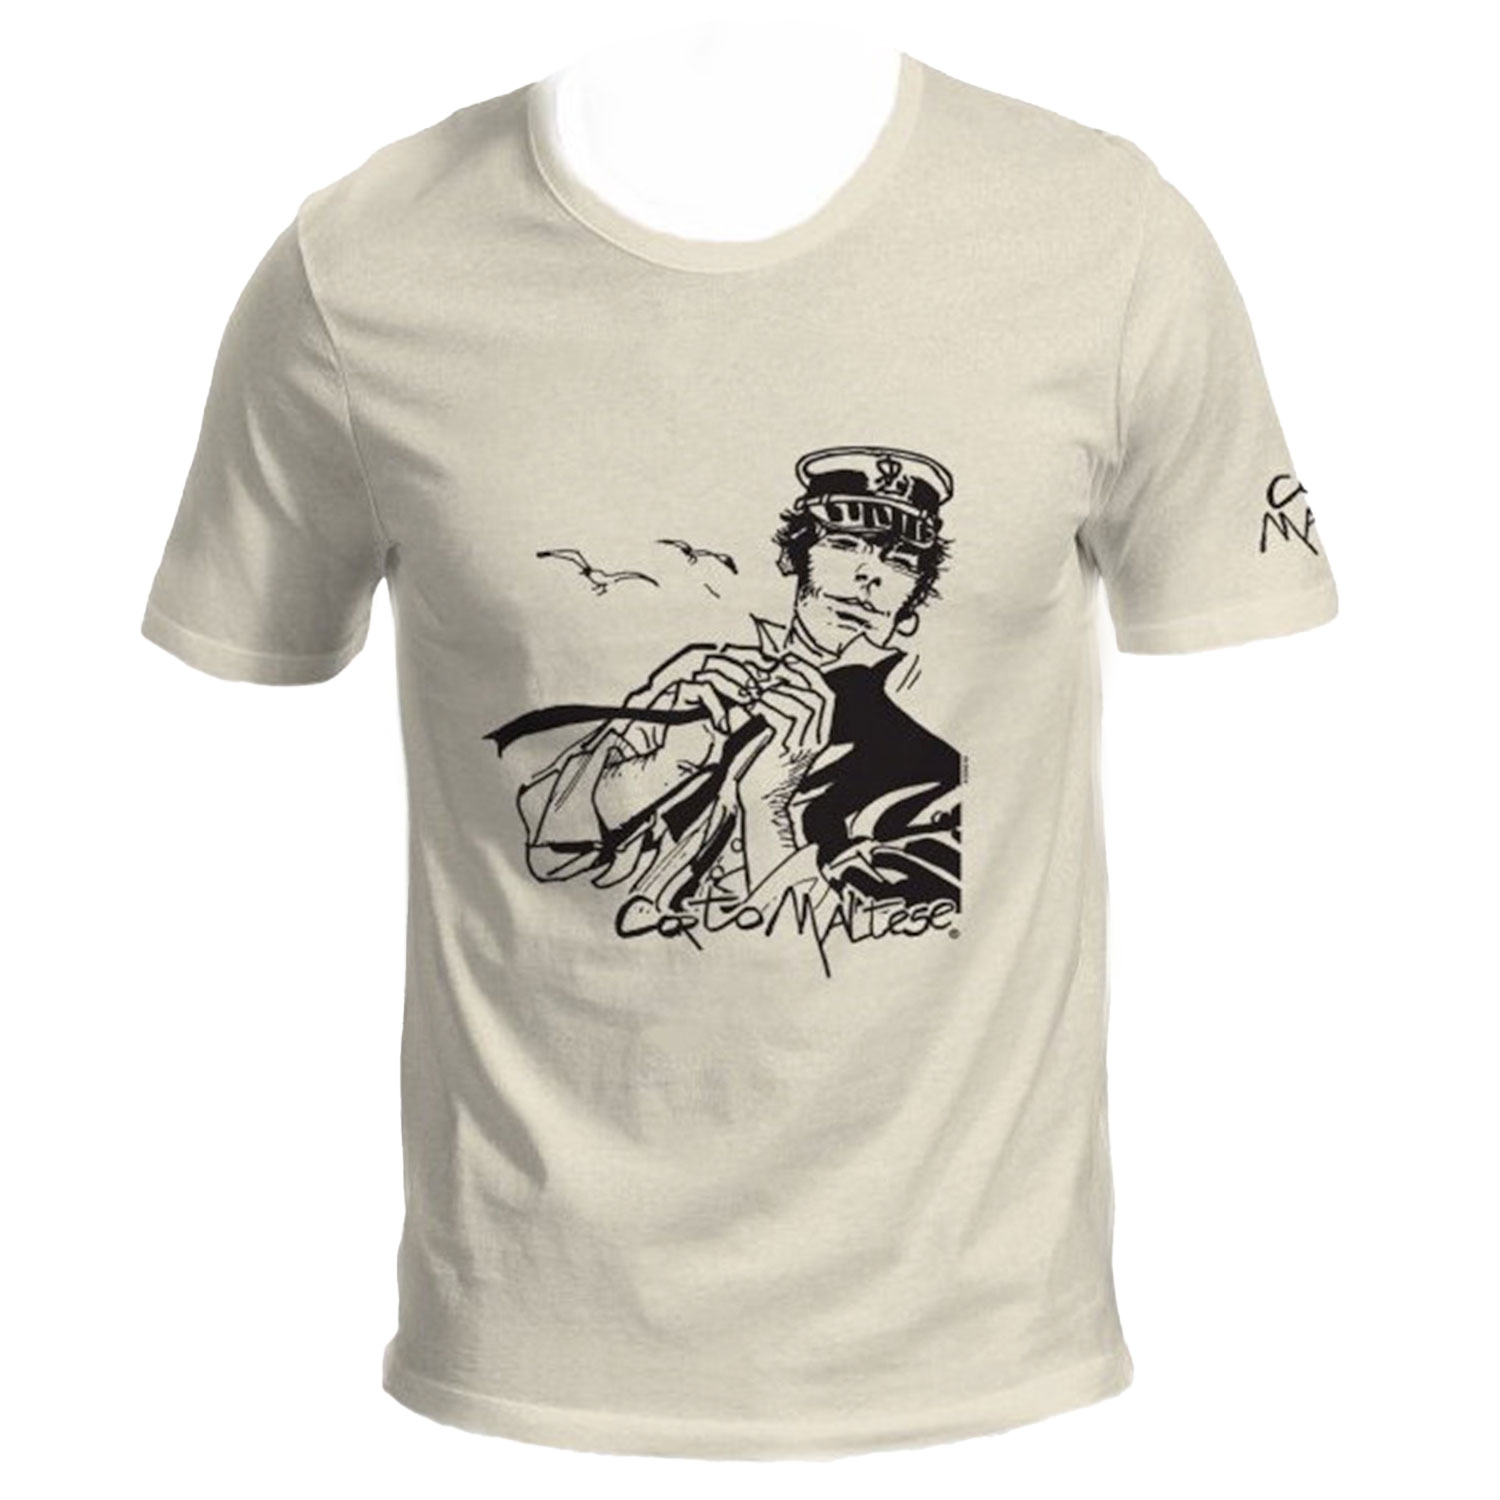 T-shirt Hugo Pratt :  Corto Maltese dans le vent - Ecru - Taille S